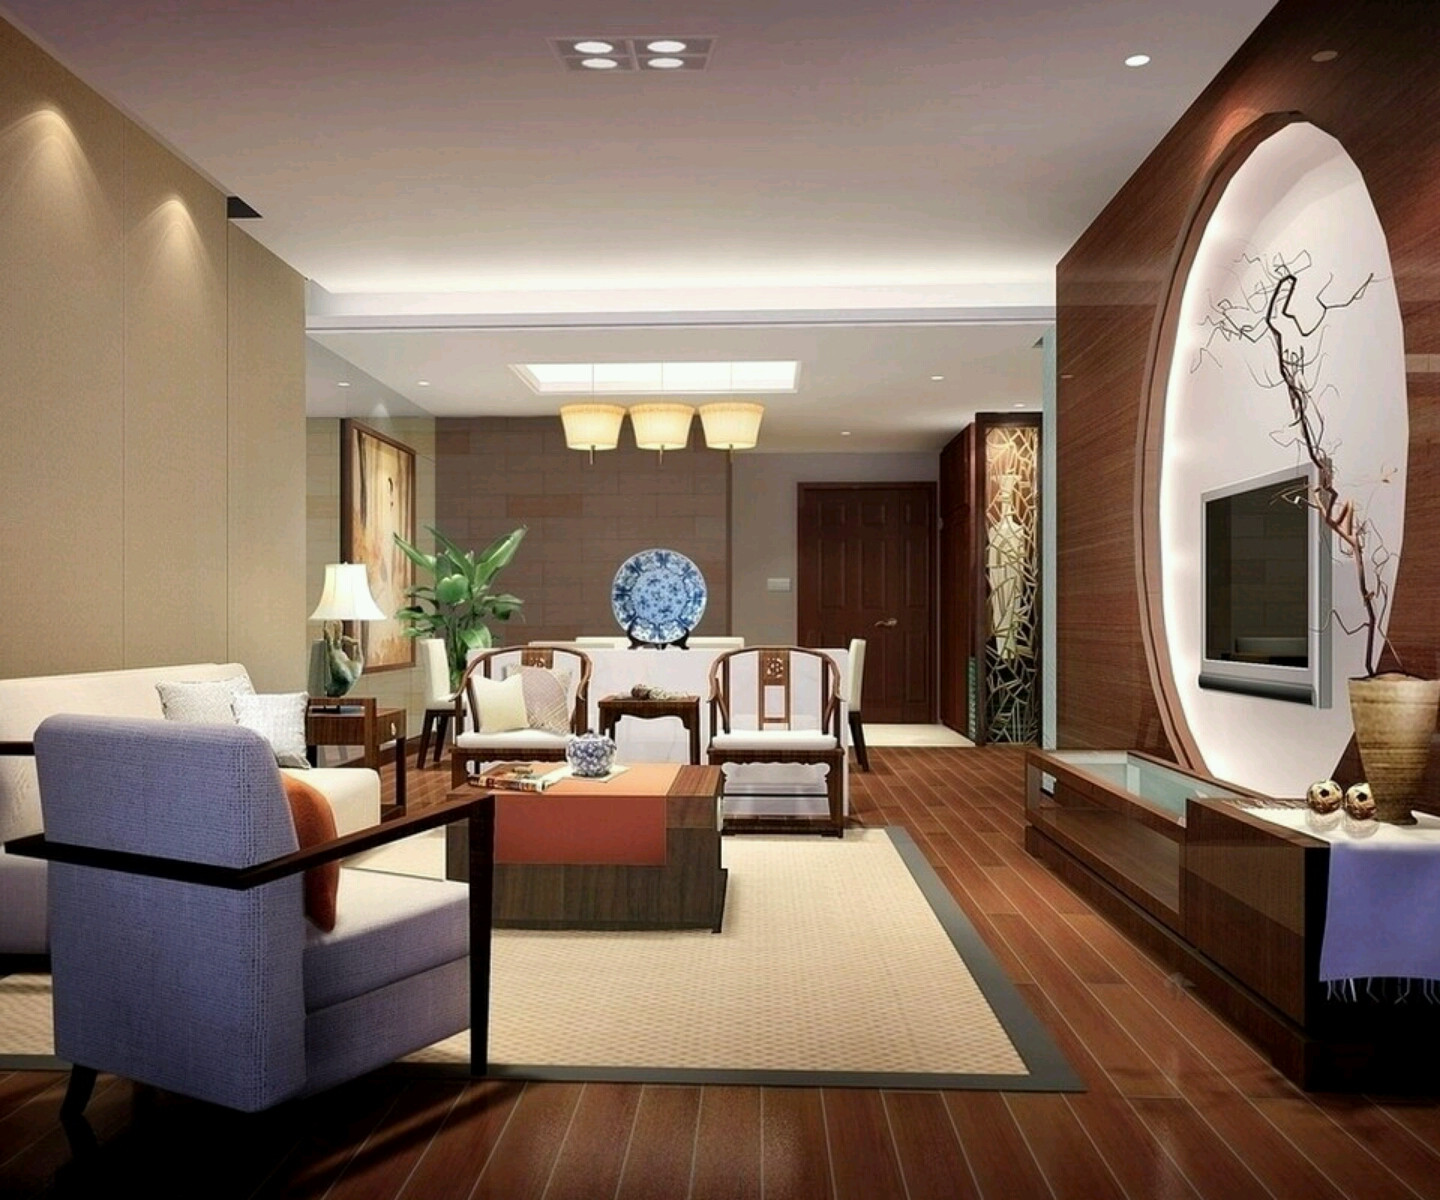 Home Decor Living Room
 Luxury homes interior decoration living room designs ideas